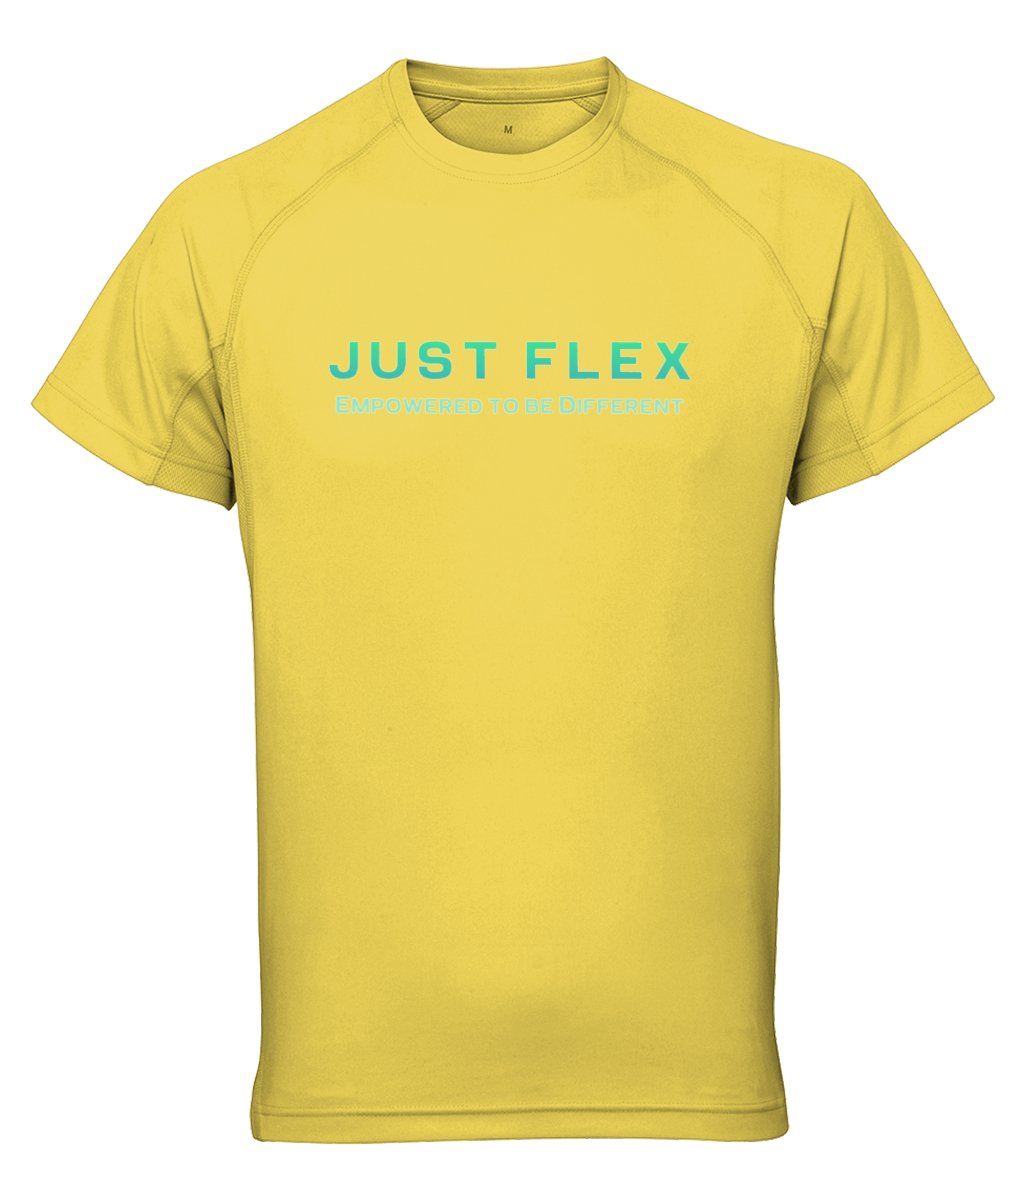 Just Flex - Empowered To Be Different Women's TriDri® Performance T - Shirt - Just Flex